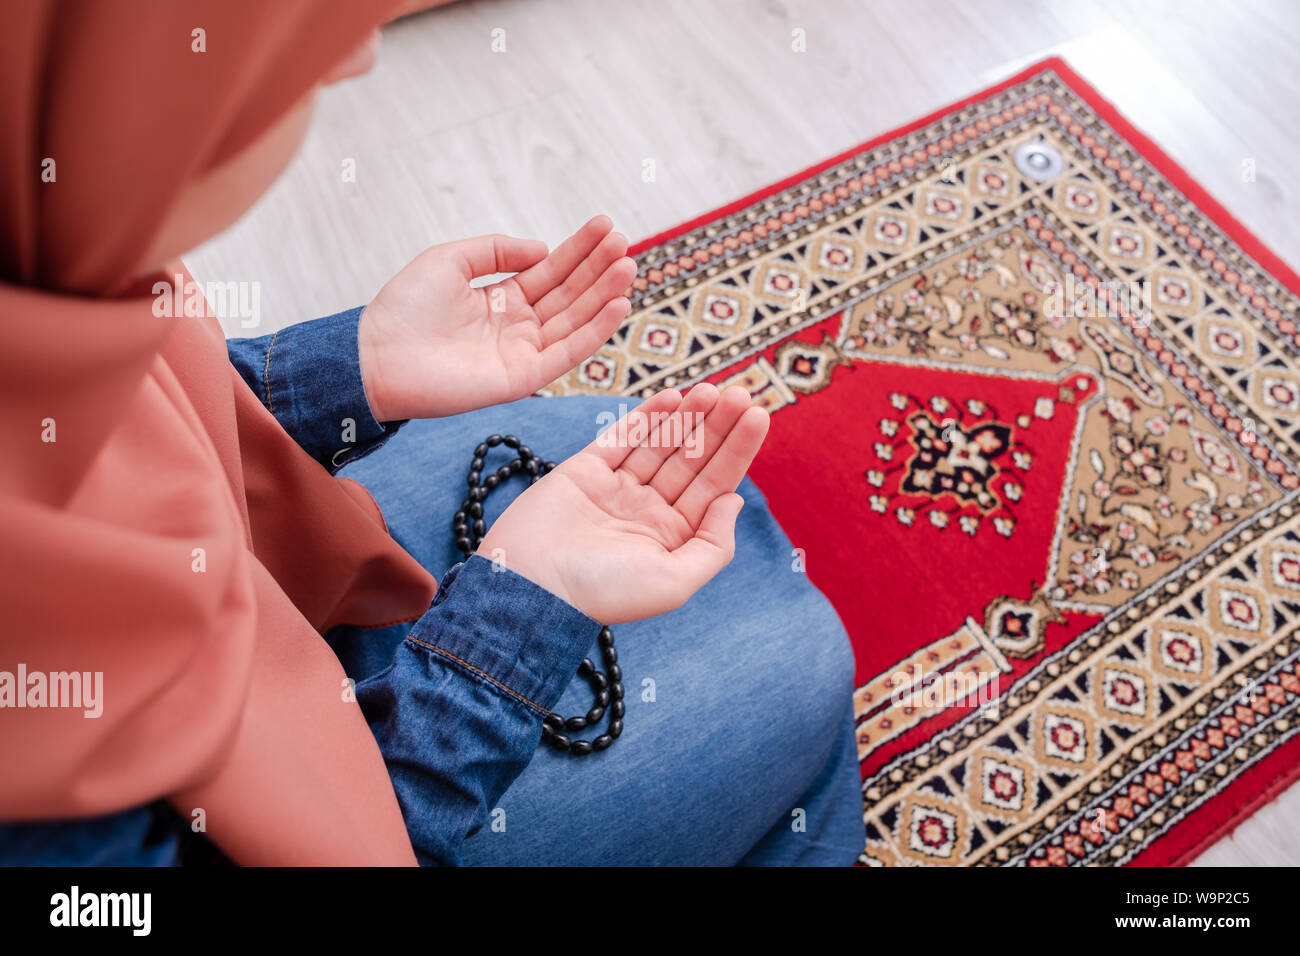 Muslim woman prayer, muslim girl open hands praying with rug Stock Photo